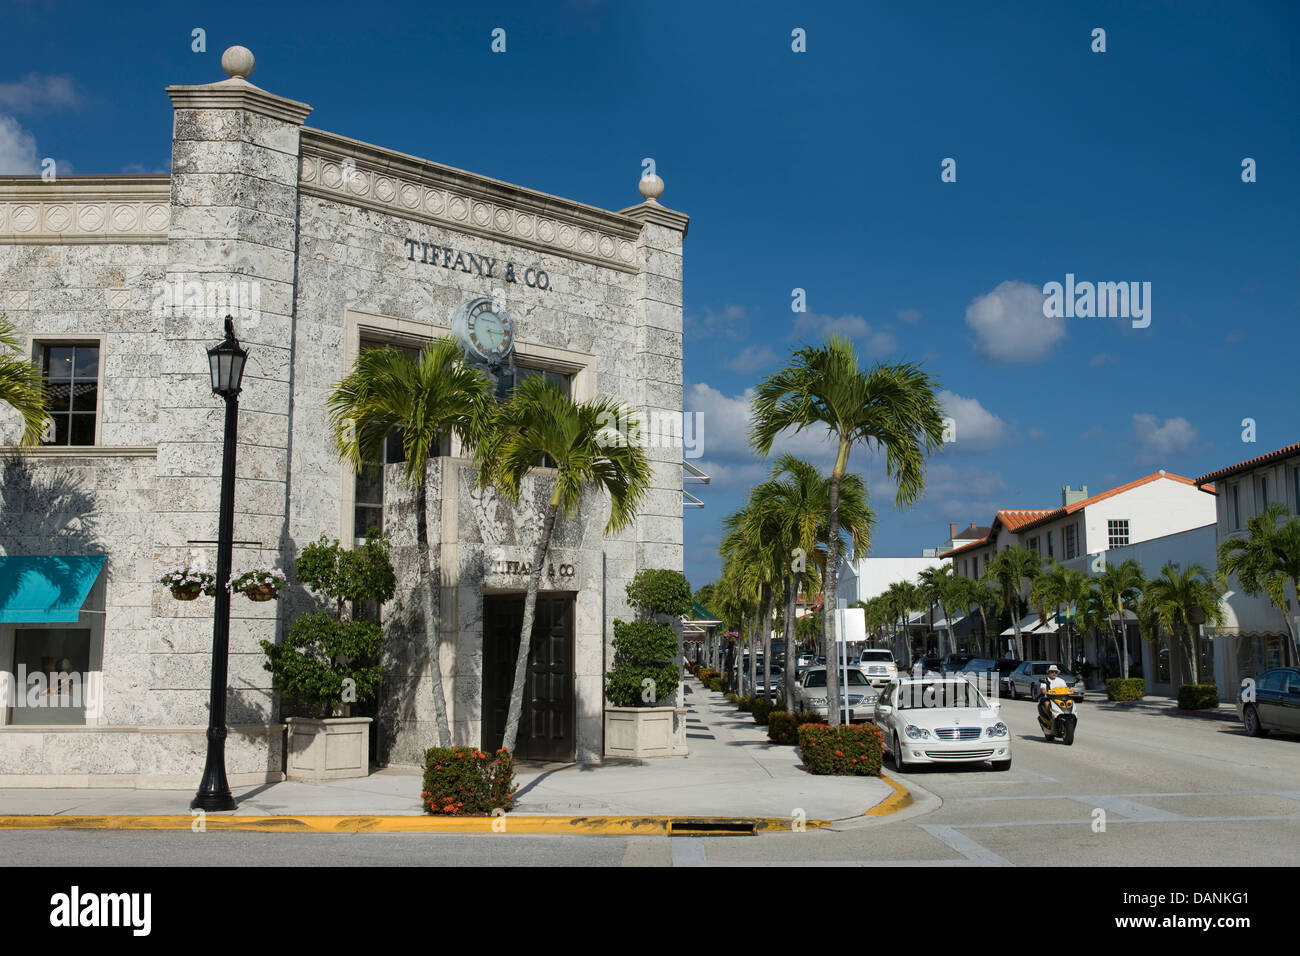 TIFFANY & UNTERNEHMEN SHOPS WORTH AVENUE PALM BEACH FLORIDA USA Stockfoto